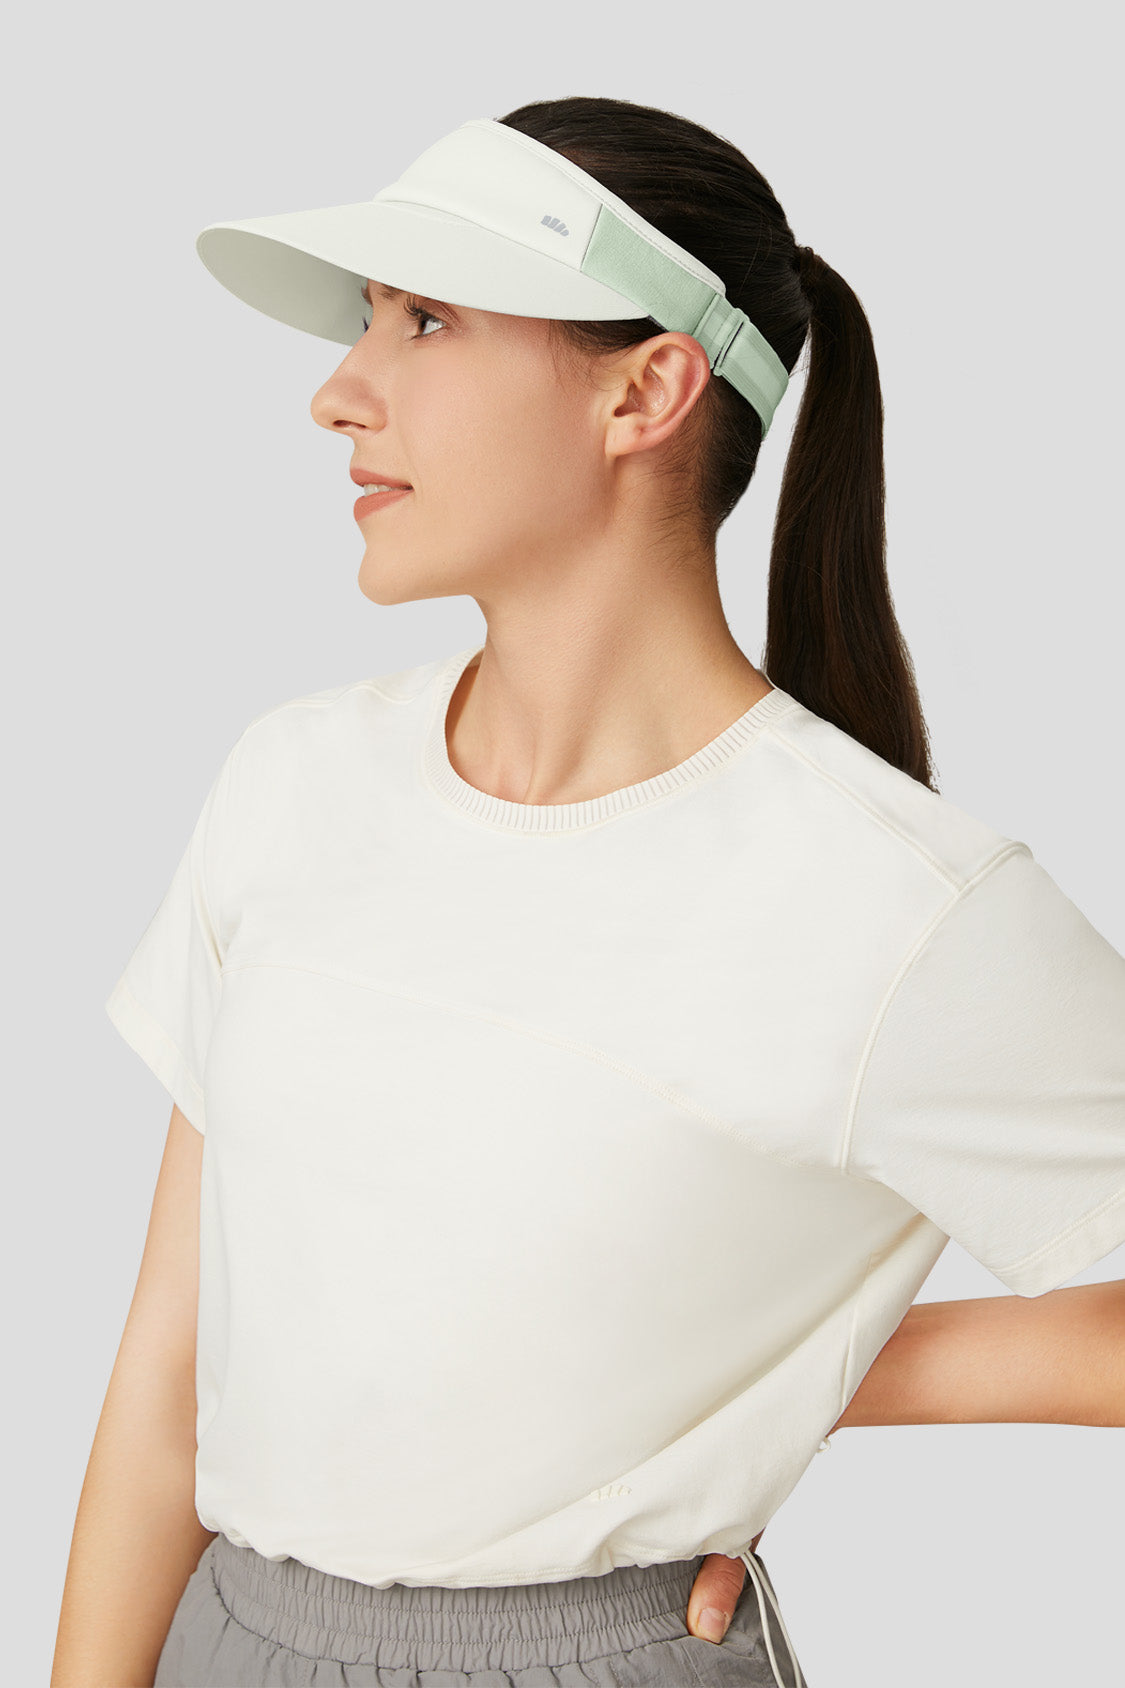 Sun Protection Hat for Women, Beneunder UV Protection Sun Visor Hat UPF50+ One Size - Adjustable / Creamy Lilac